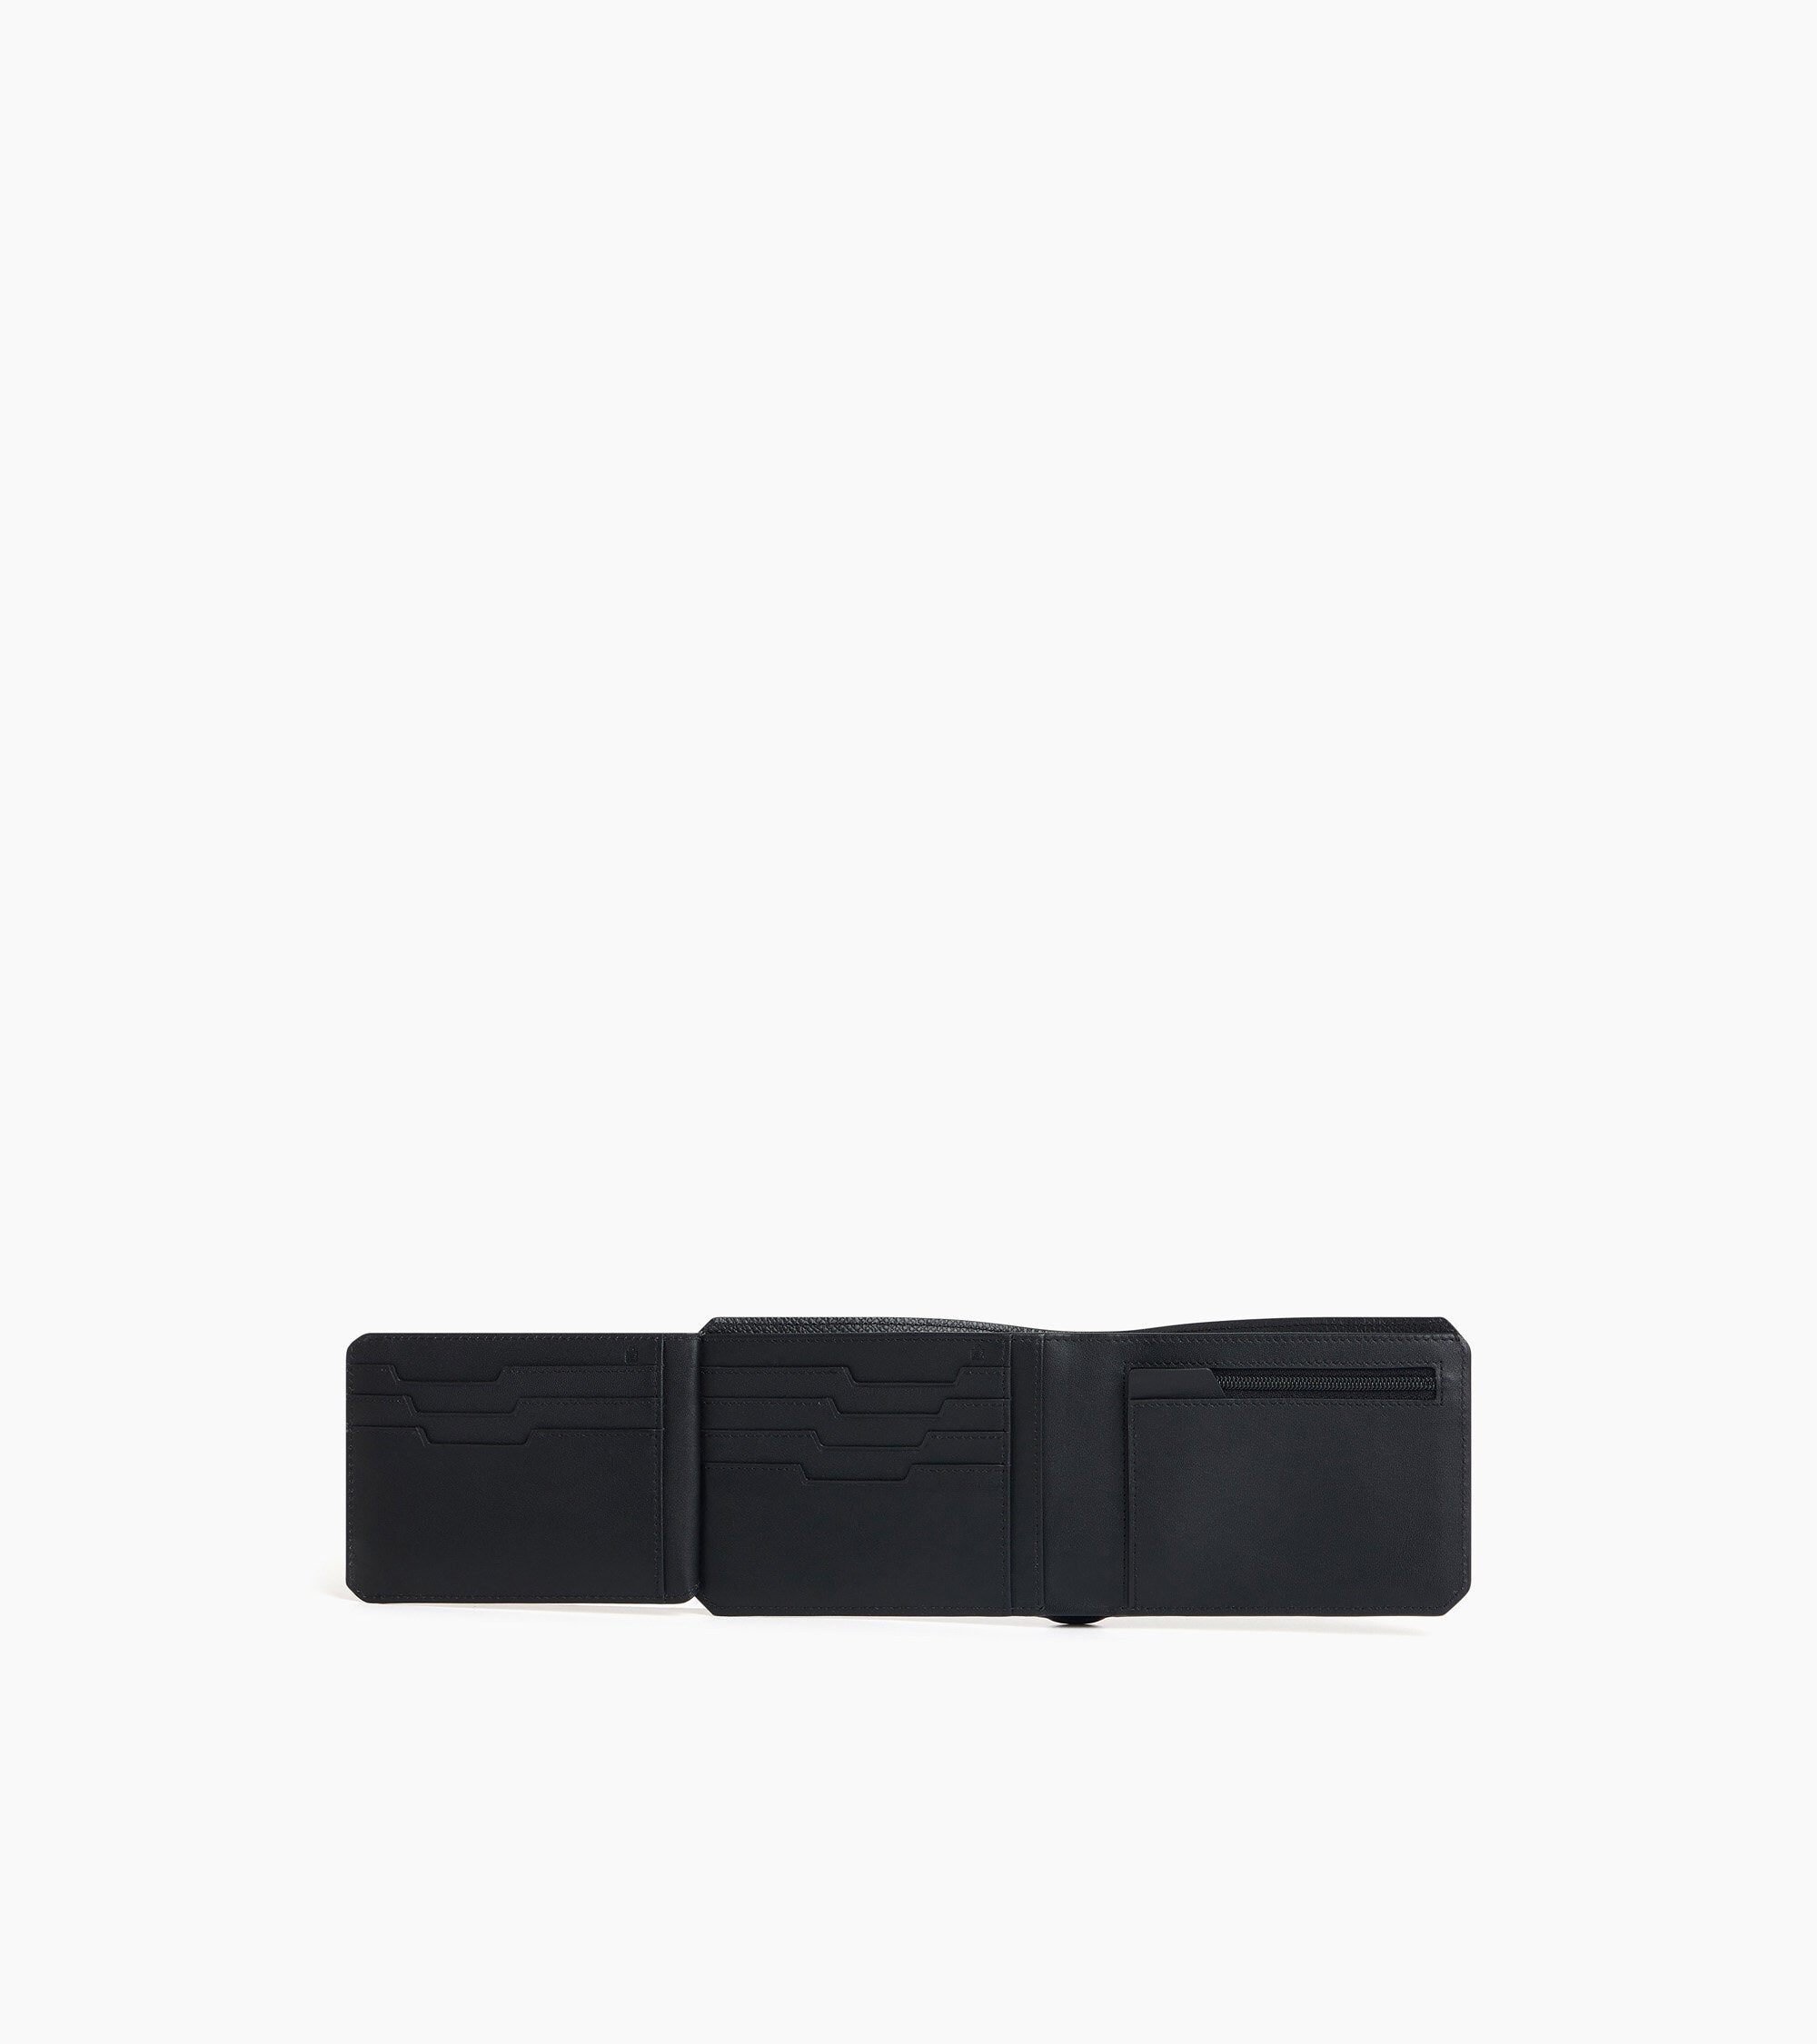 Gaston horizontal wallet 2 flaps in cross grain leather